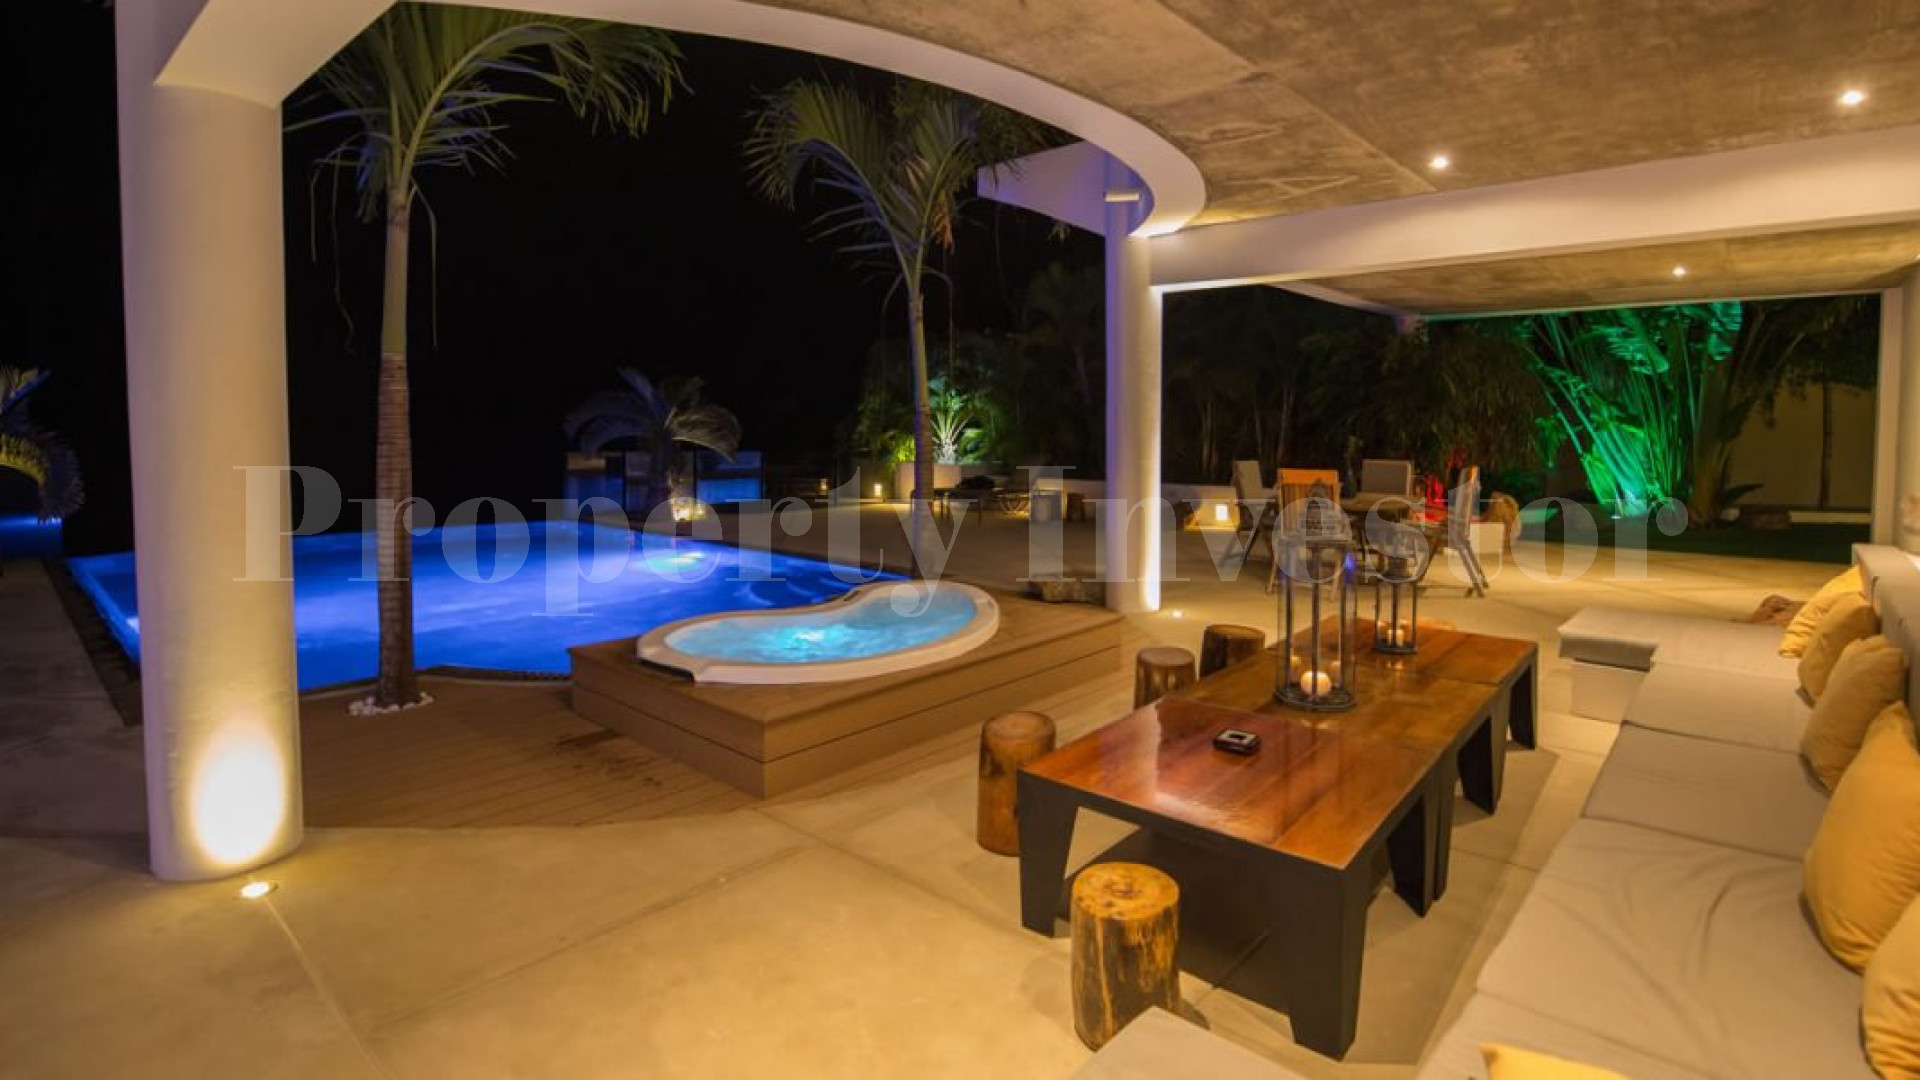 Magnificent 4 Bedroom Luxury Villa with Breathtaking Ocean Views for Sale in Loma Bonita, Dominican Republic